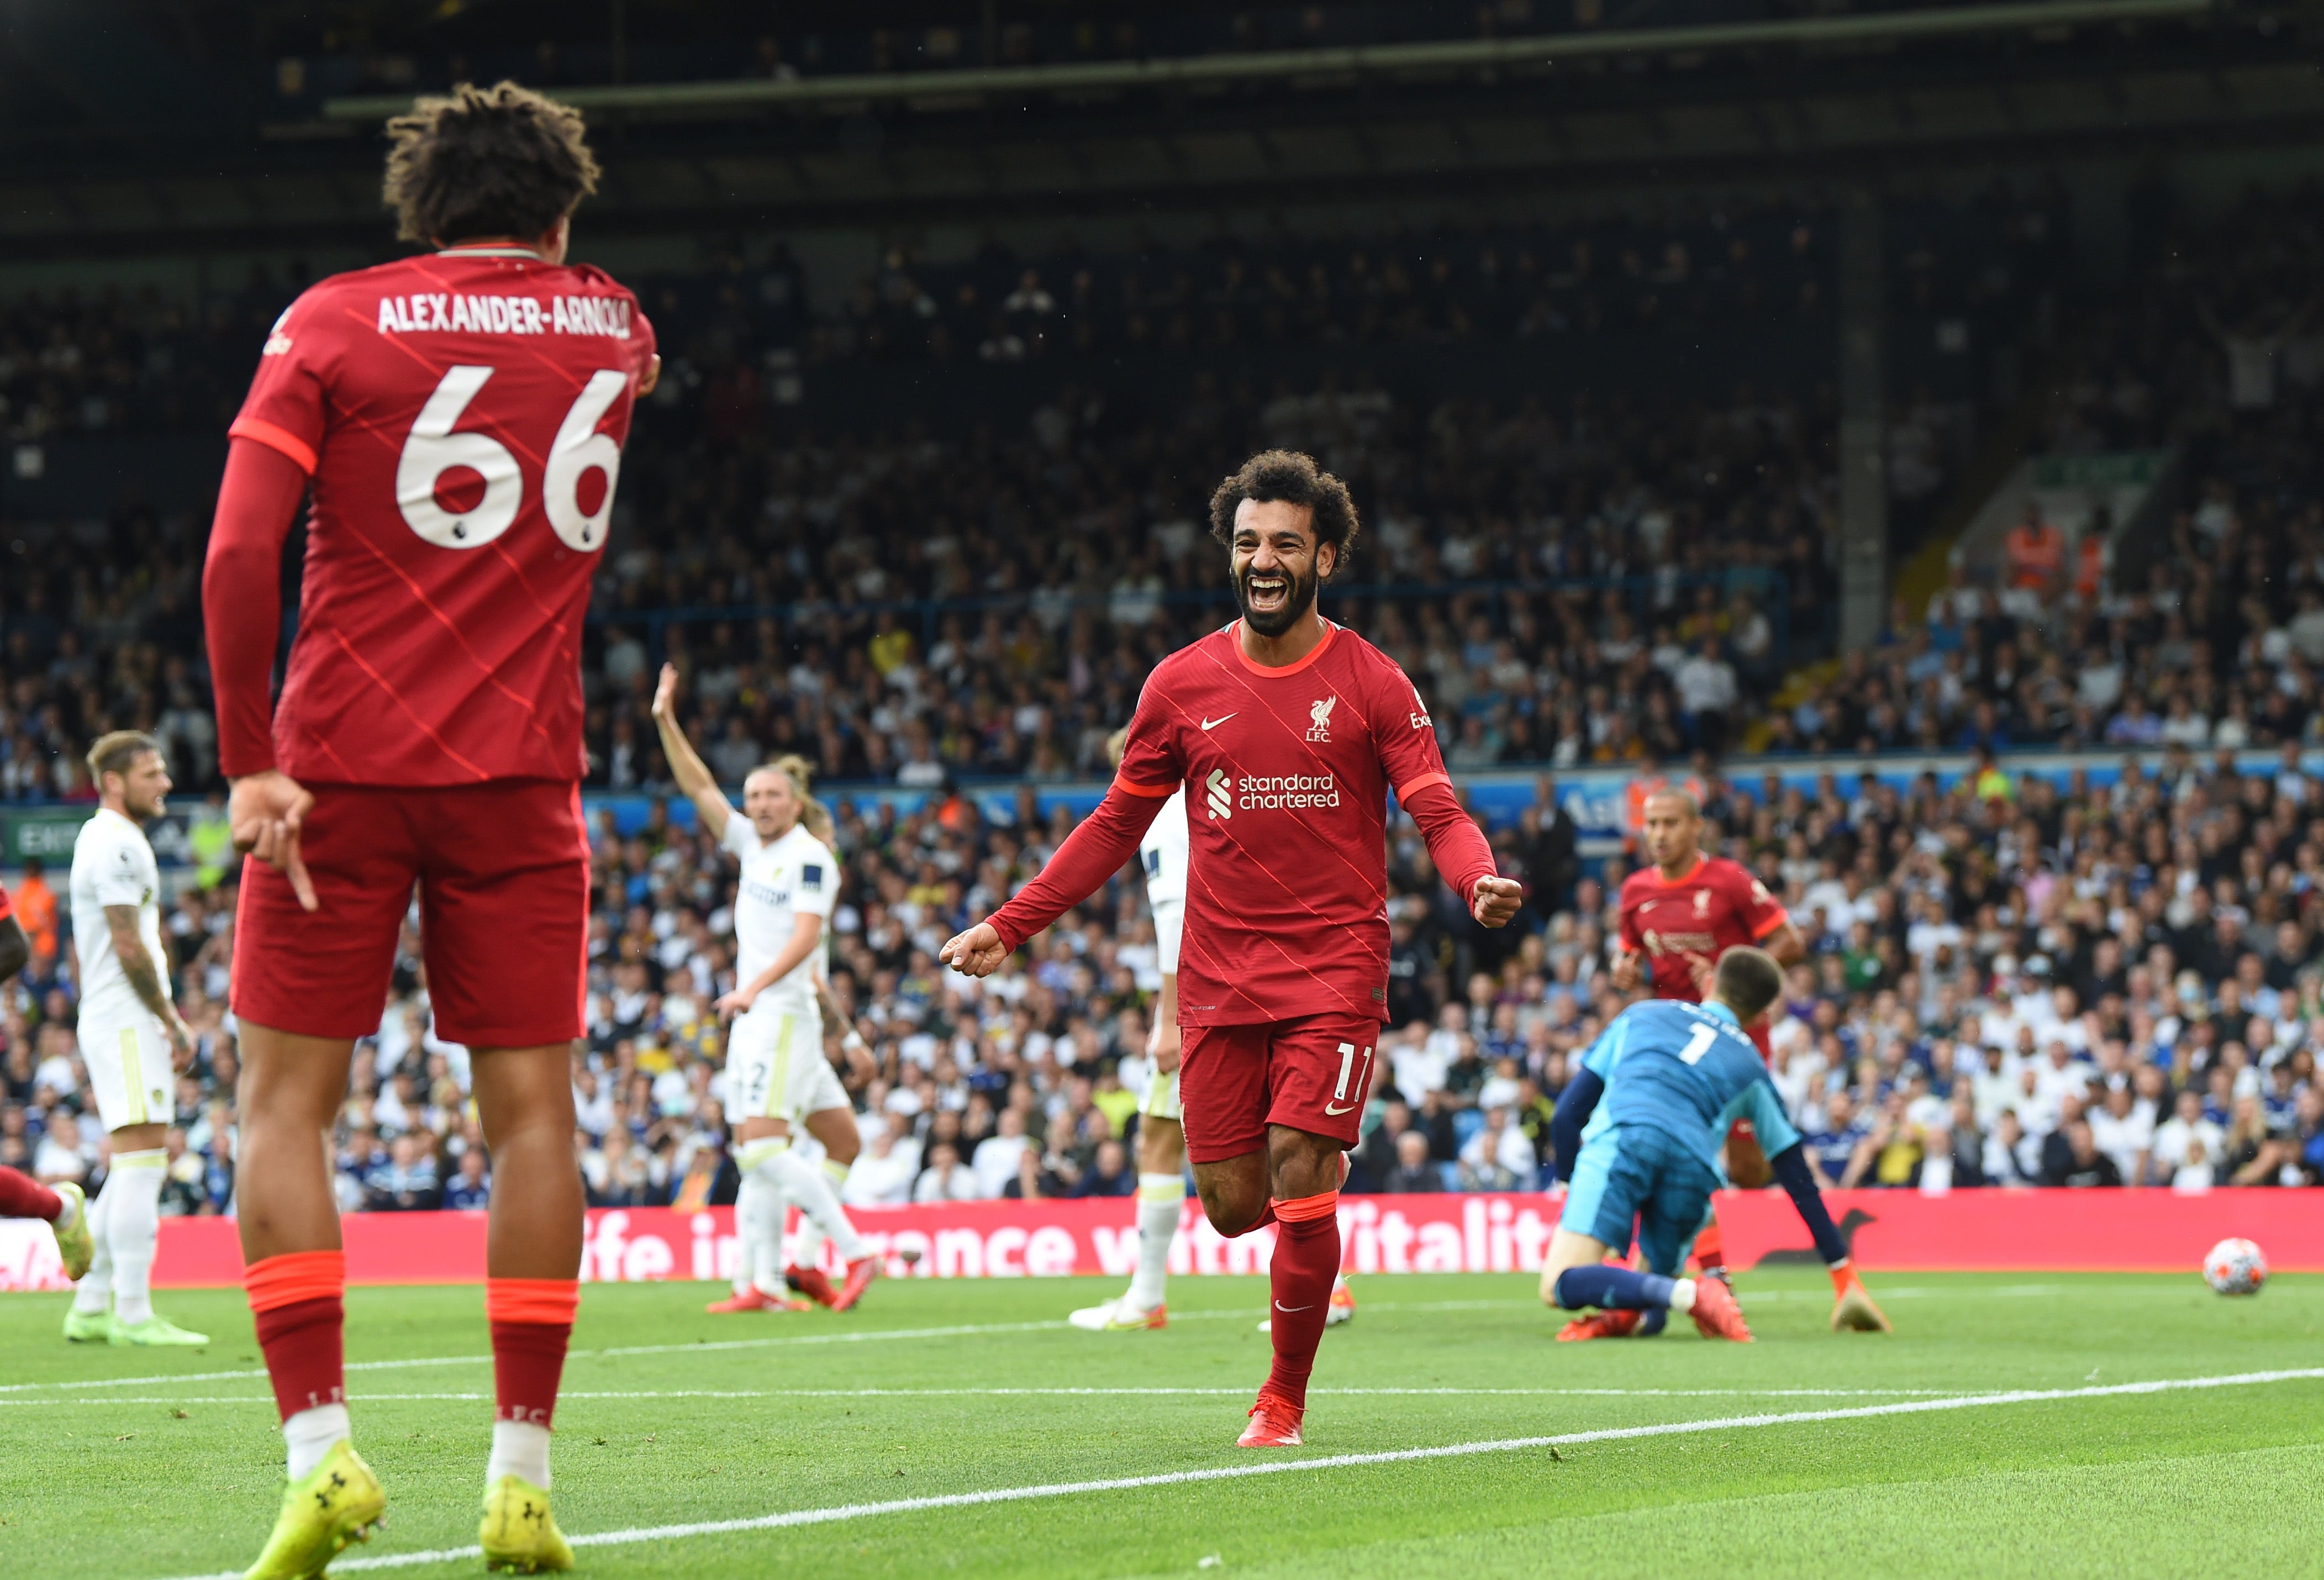 Salah struck his 100th Premier League goal